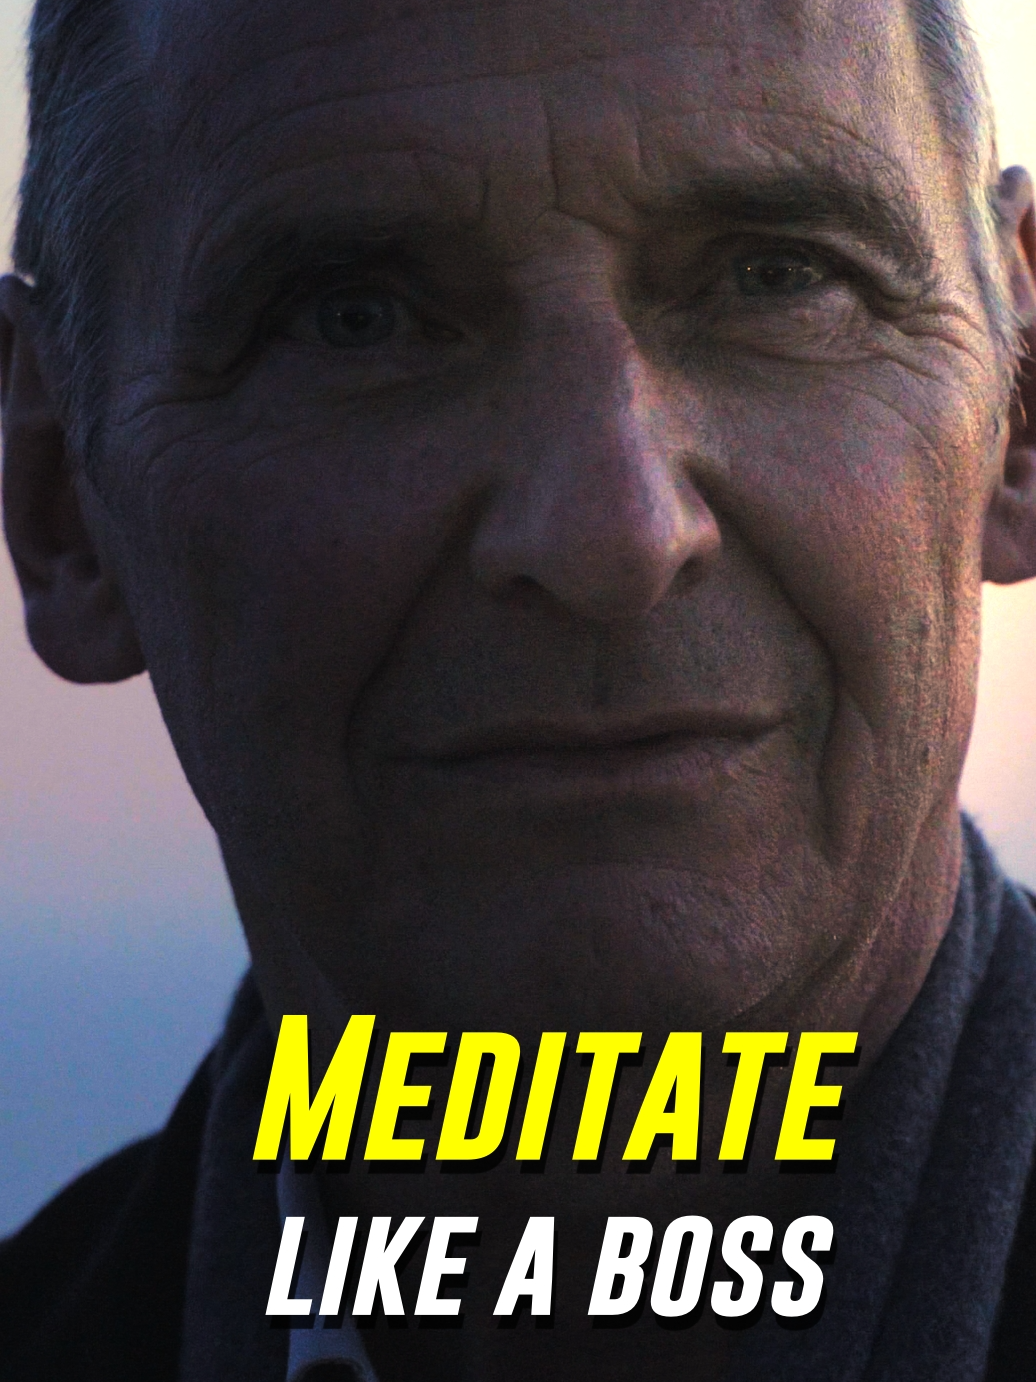 Meditation Technique for Successful People #russianmafiaboss #grimhustle #lifeadvice #meditation #capemontenegro